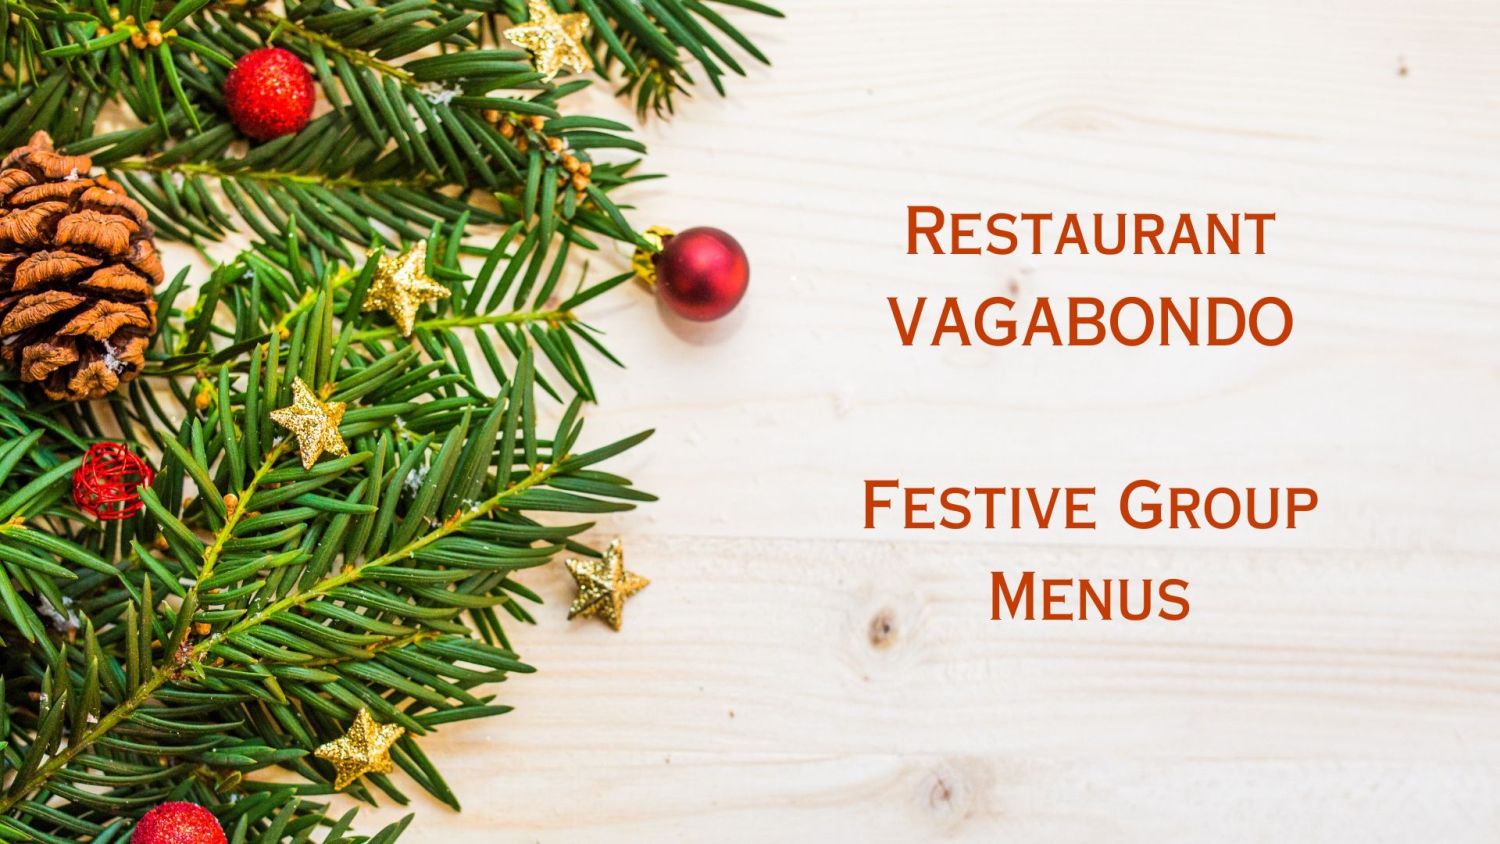 Vagabondo Restaurant Grupo Menus